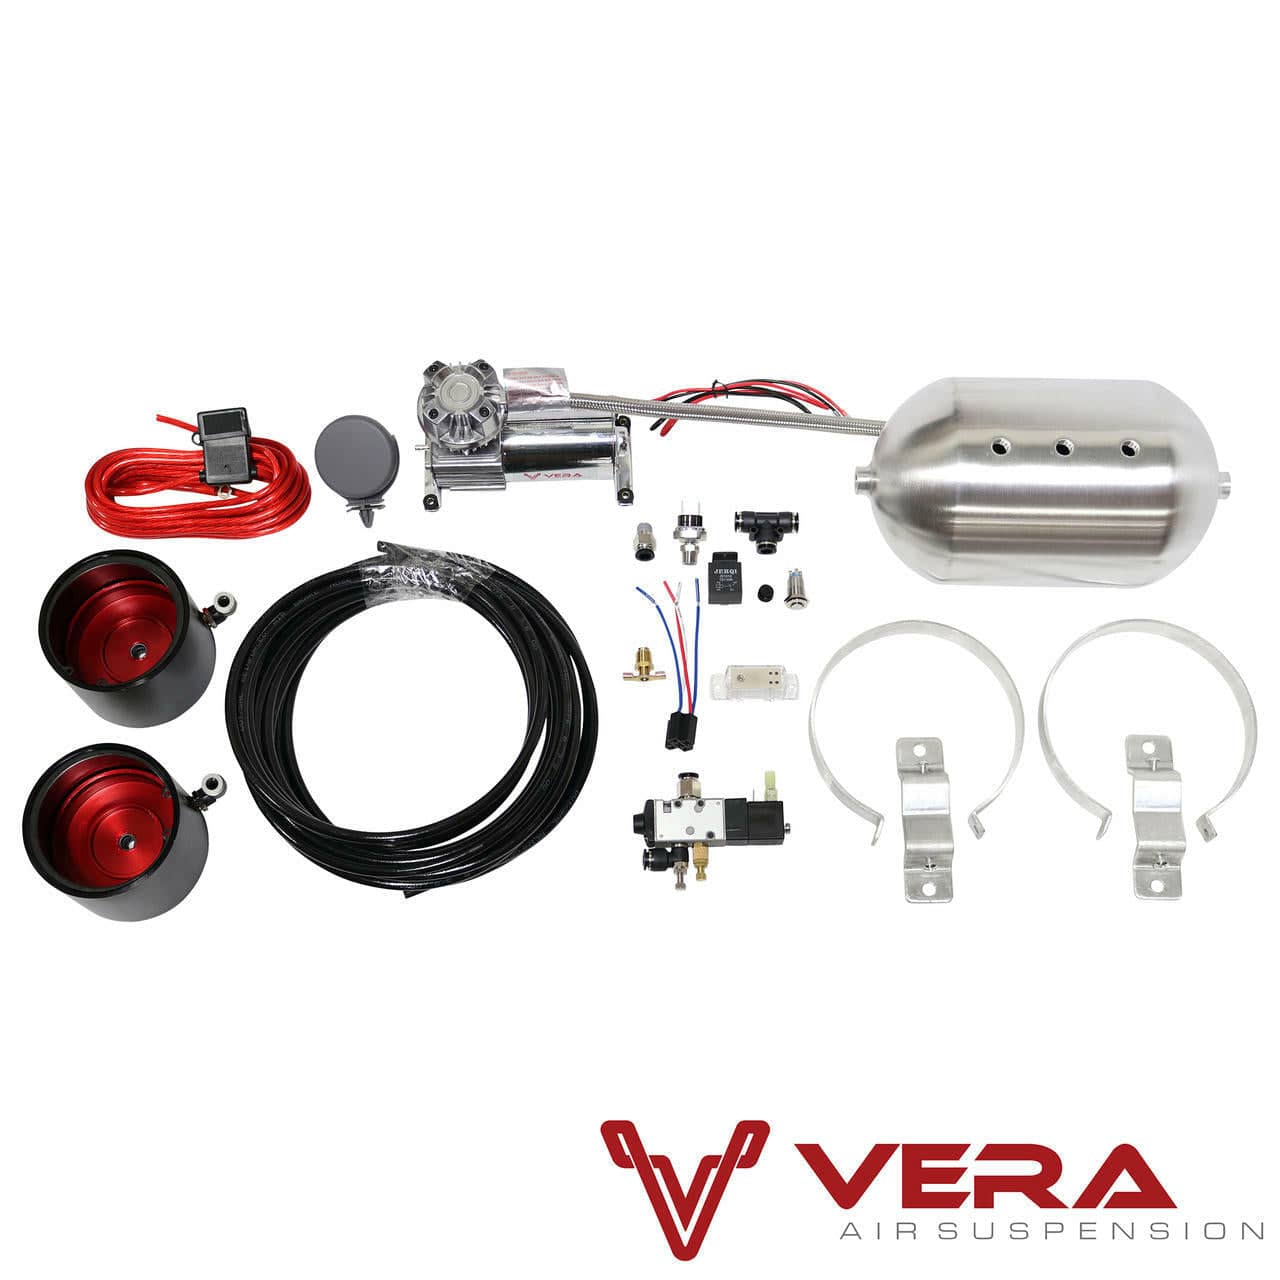 VERA V-ACK Air Cups - Gold Control System